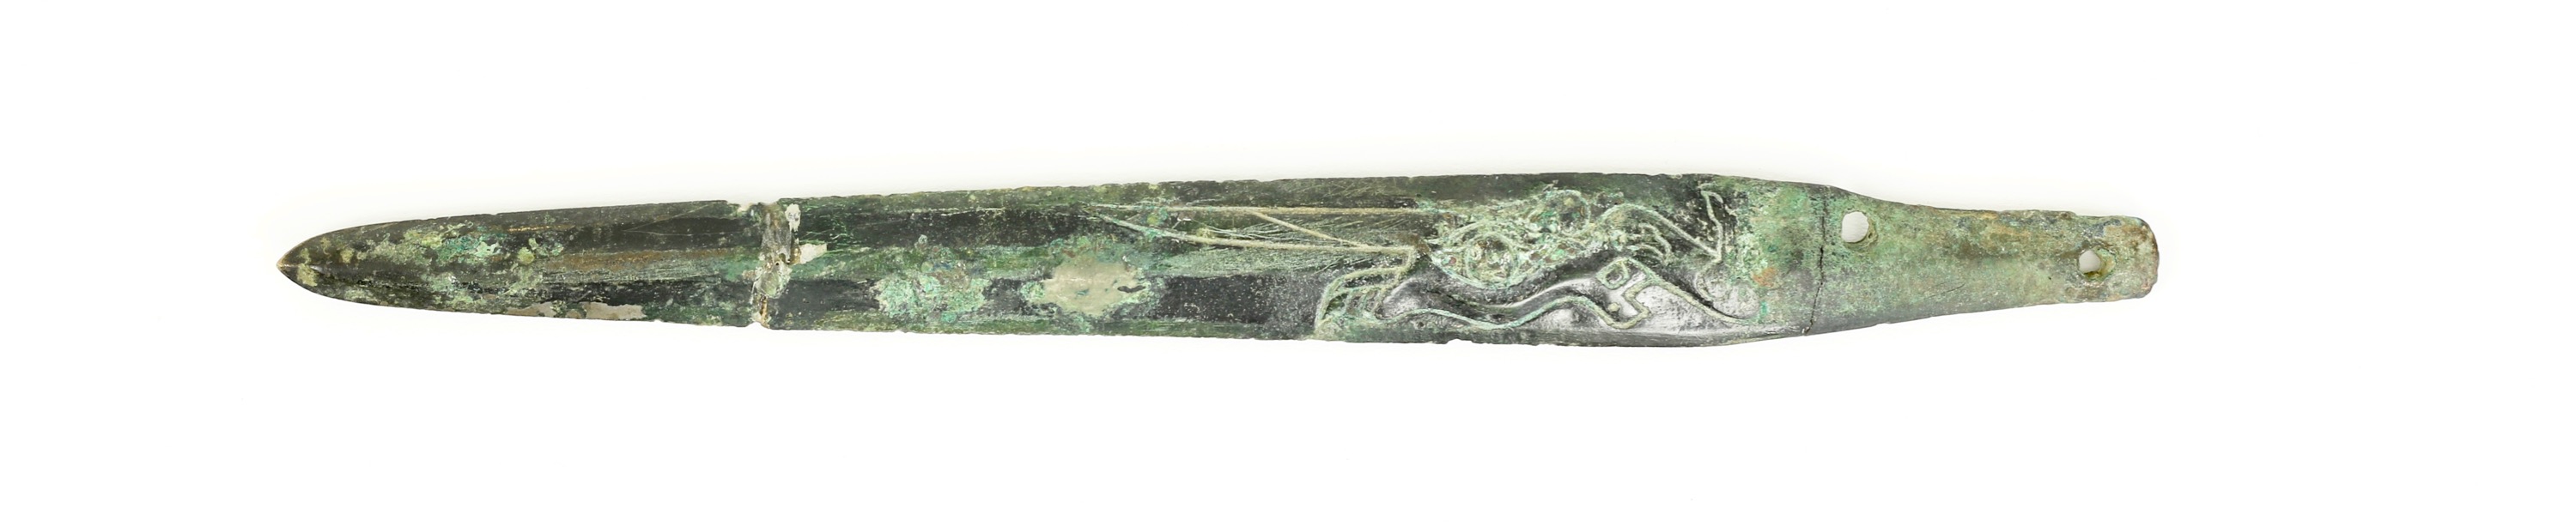 Ancient bronze Ba-Shu dagger